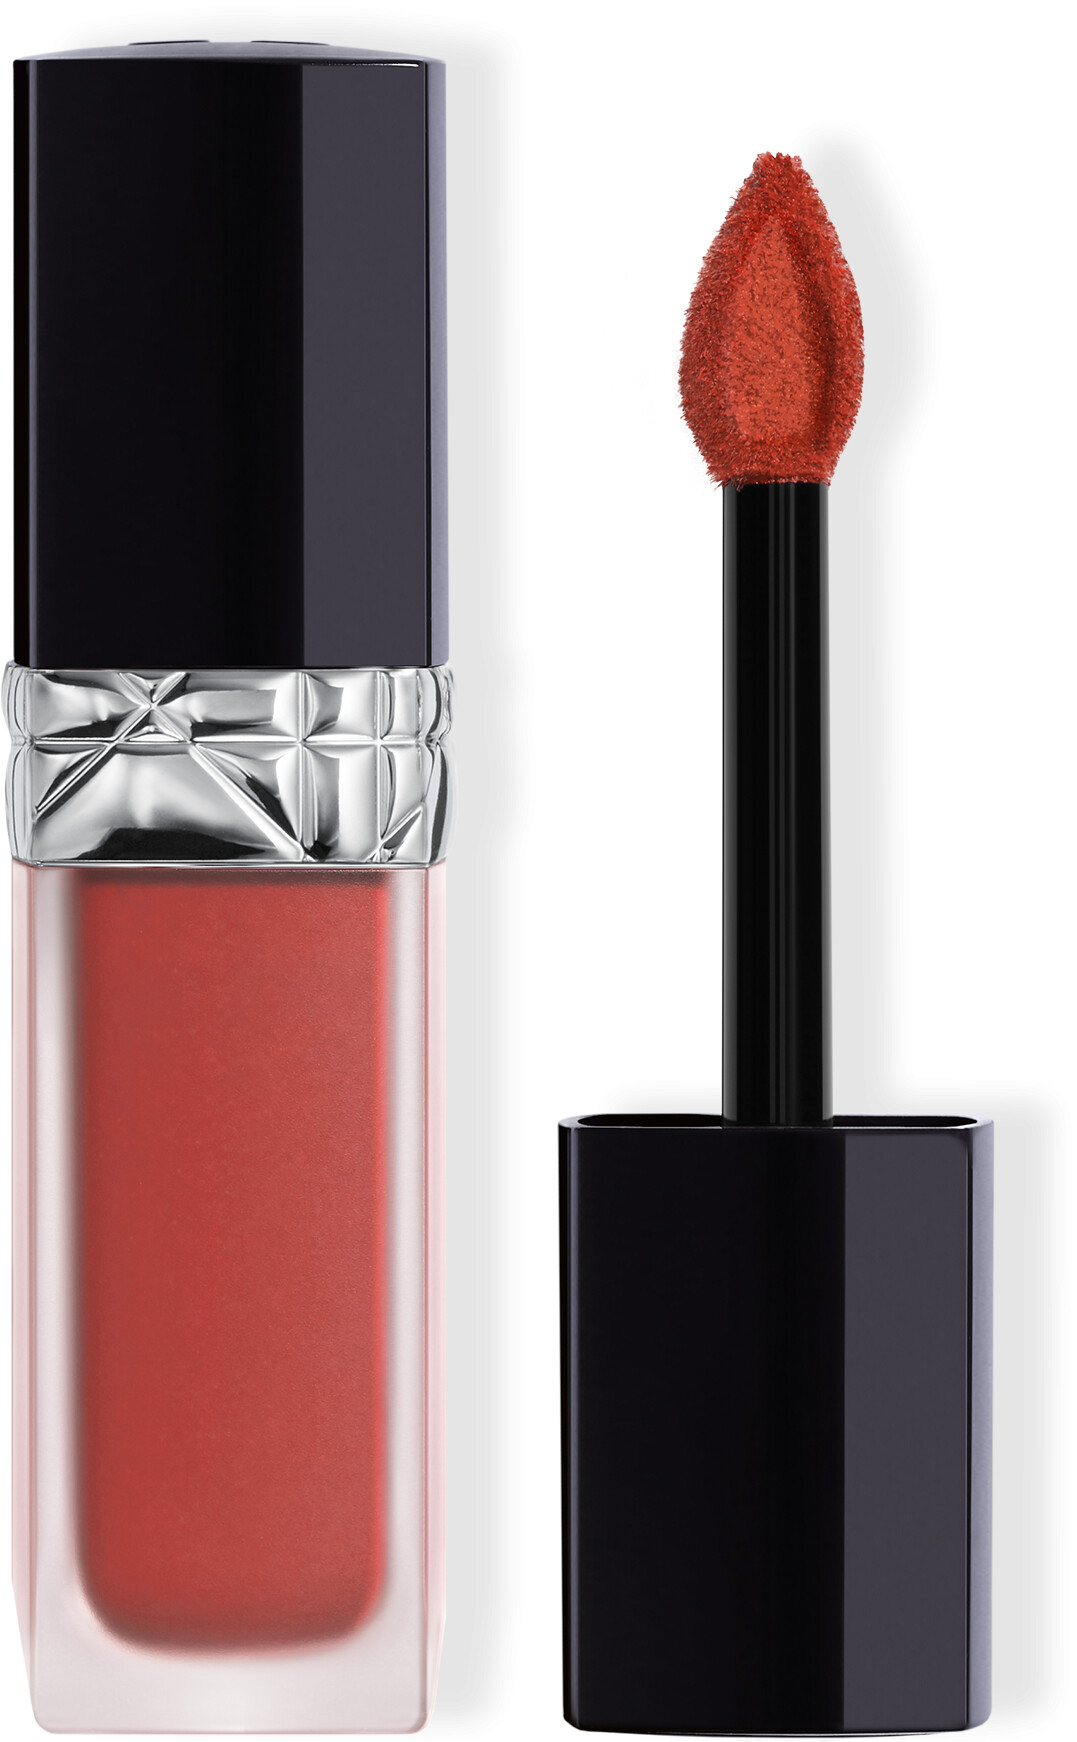 DIOR Rouge Dior Forever Liquid Lipstick 6ml 720 - Forever Icone